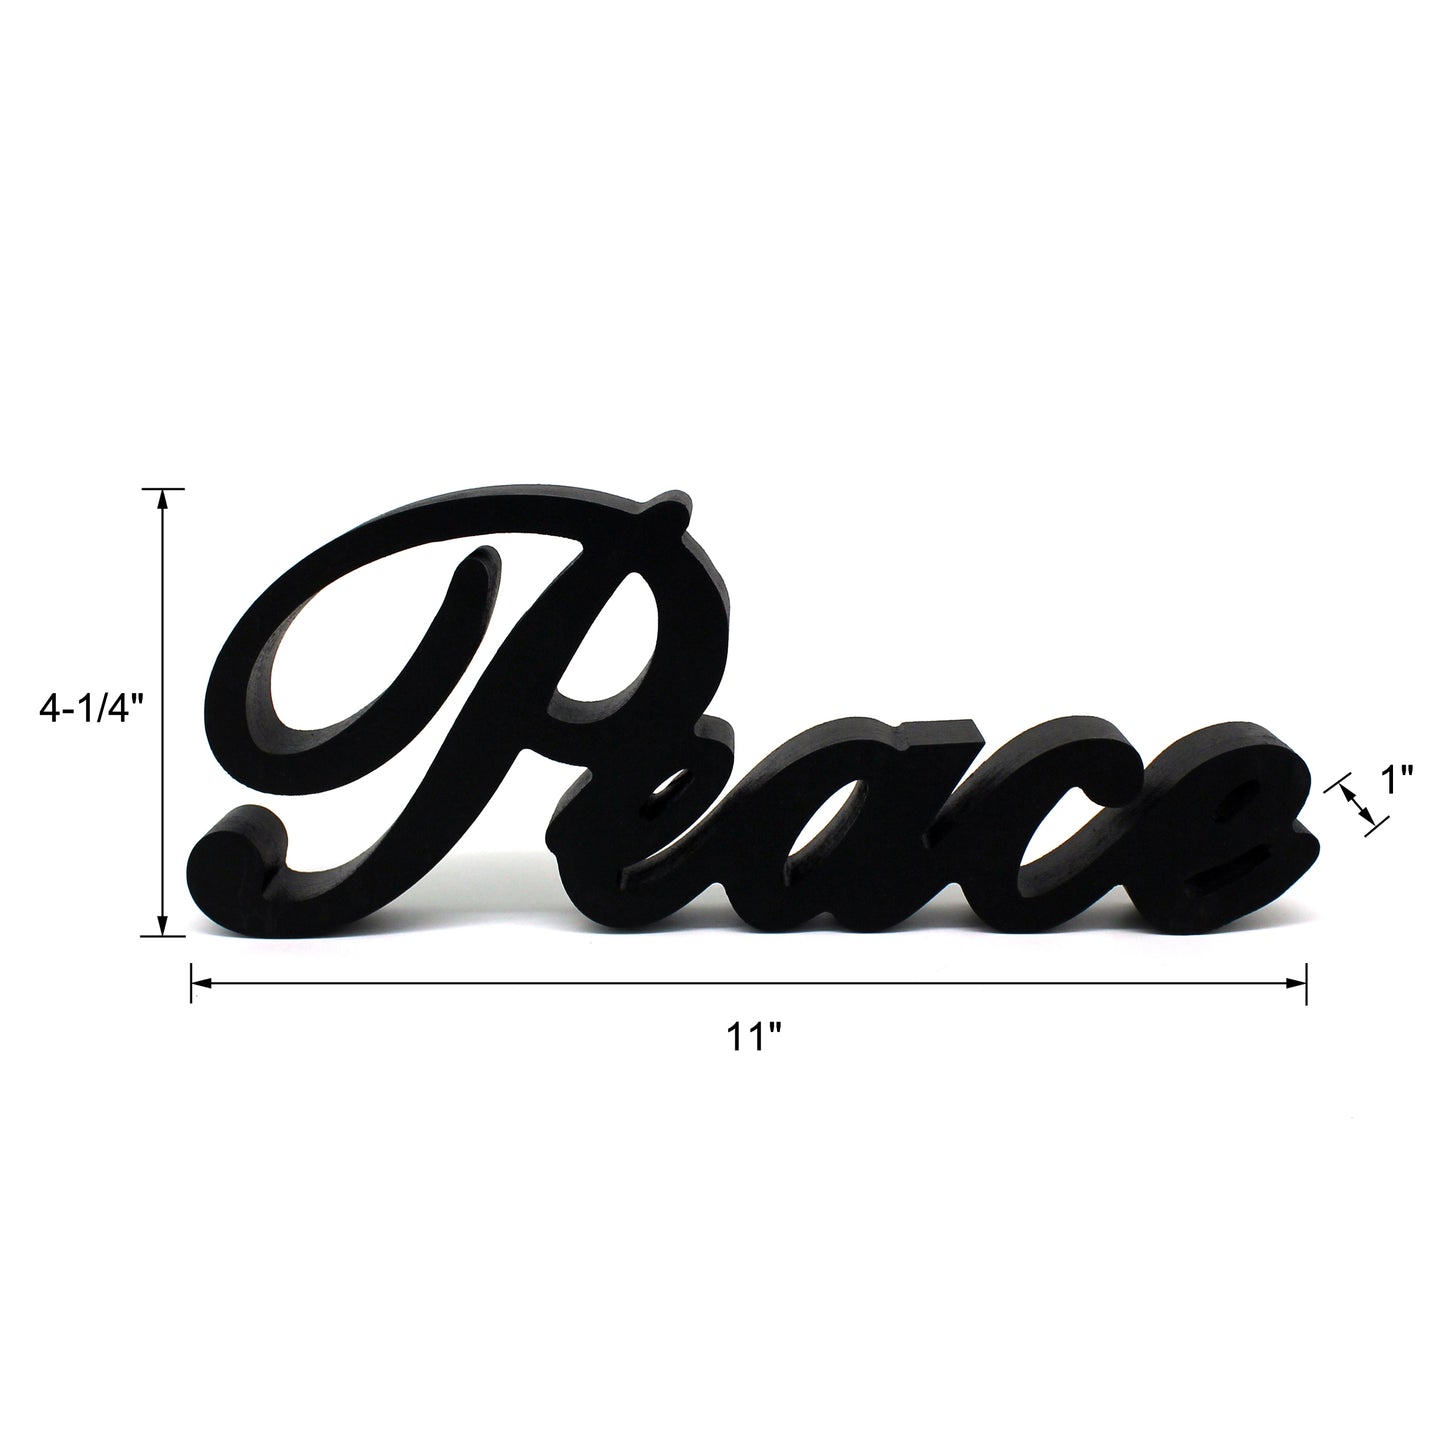 CVHOMEDECO. Matt Black Wooden Words Sign Free Standing "Peace" Desk/Table/Shelf/Home Wall/Office Decoration Art, 11 x 4.25 x 1 Inch